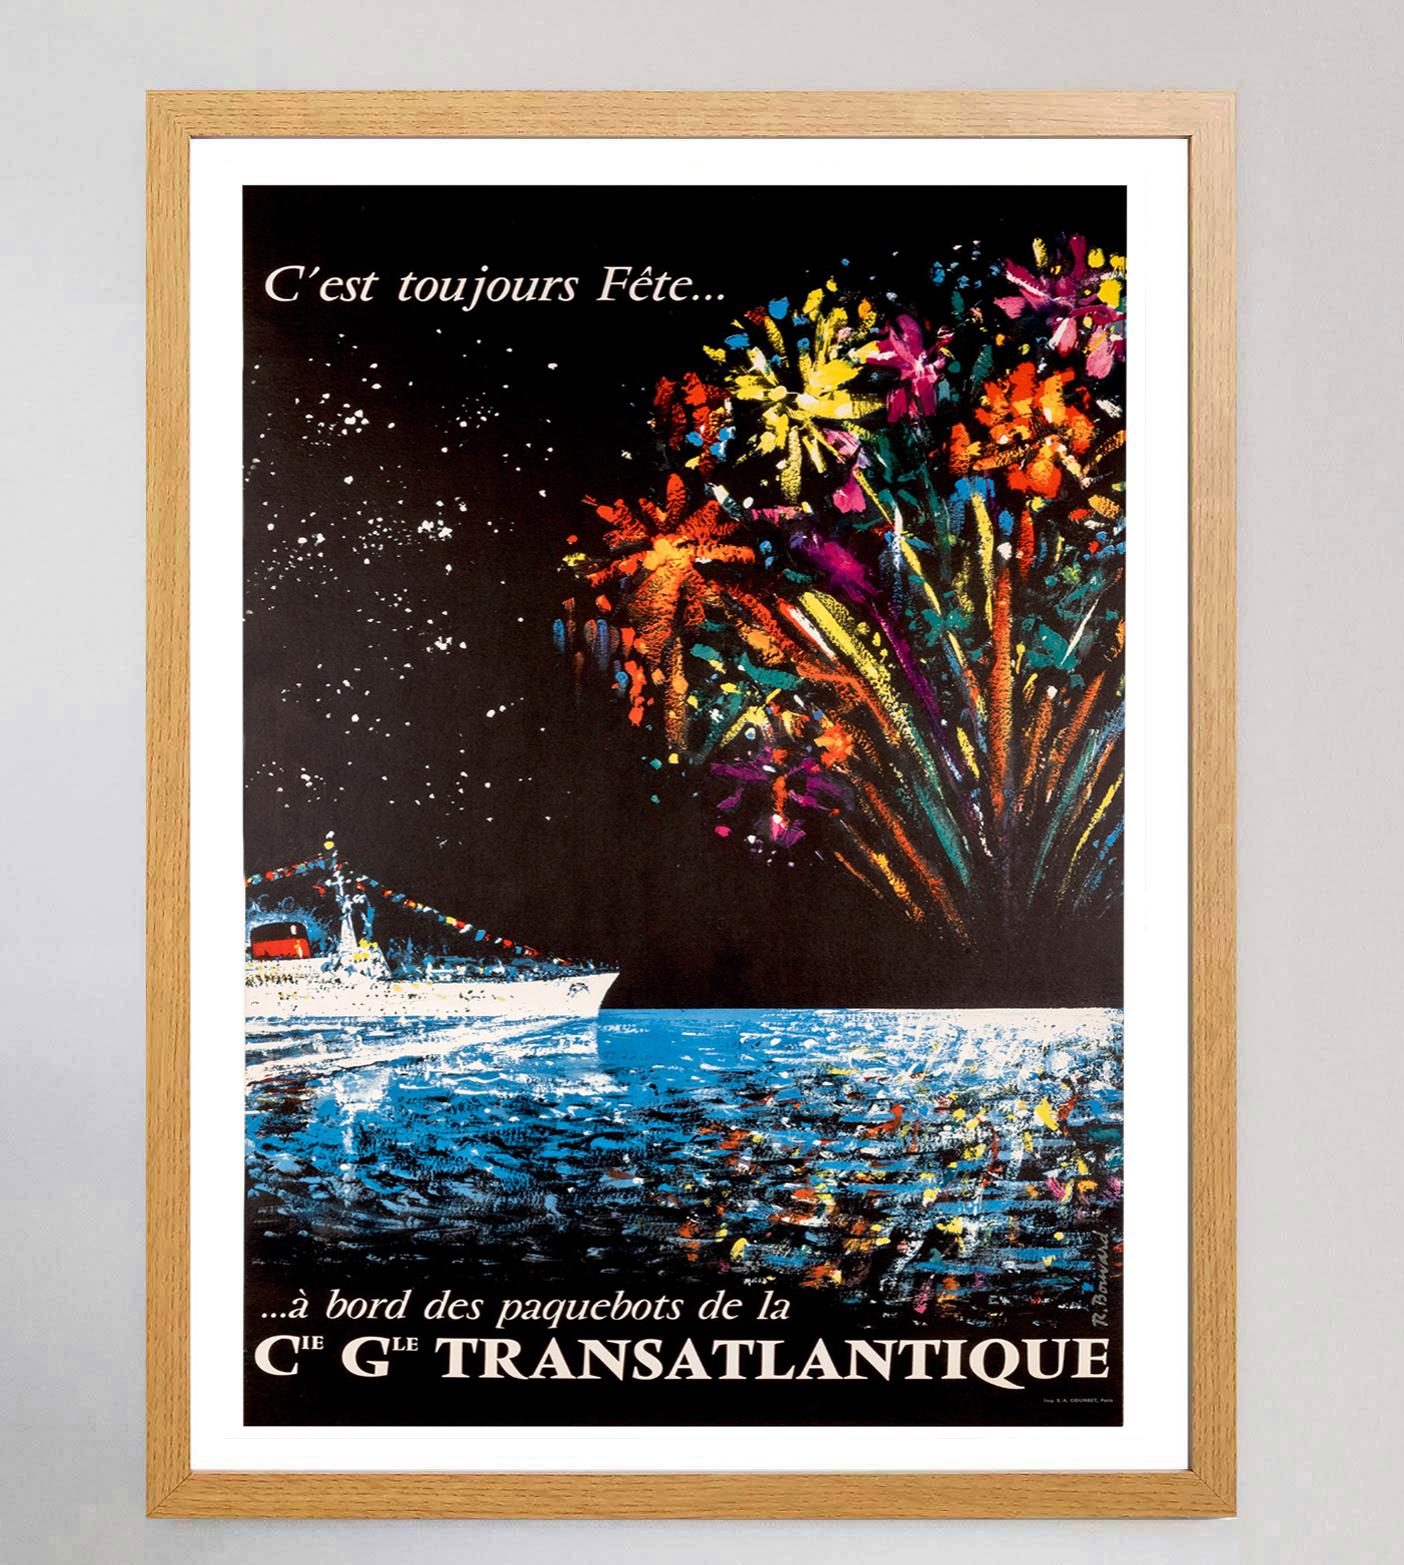 French 1949 Cie Gle Transatlantique Original Vintage Poster For Sale